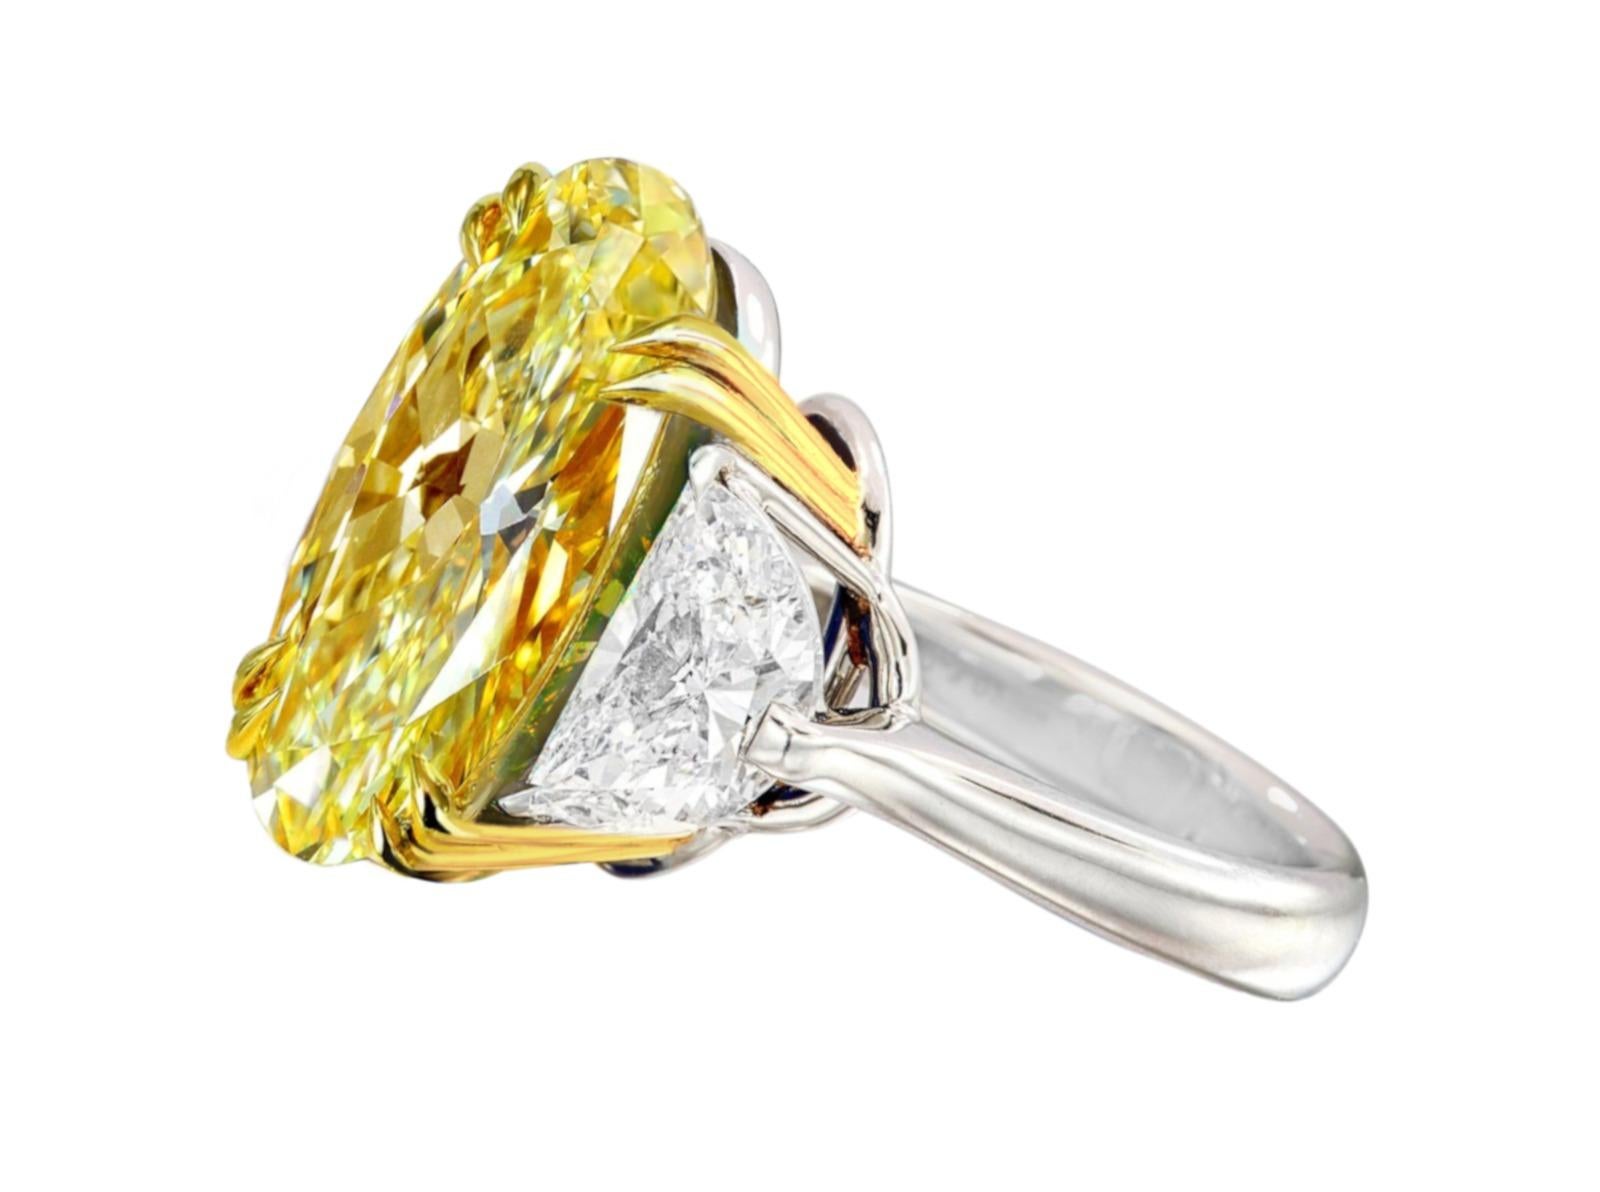 Modern GIA Certified 5.36 Carat Fancy Intense Yellow Internally Flawless Diamond Ring For Sale